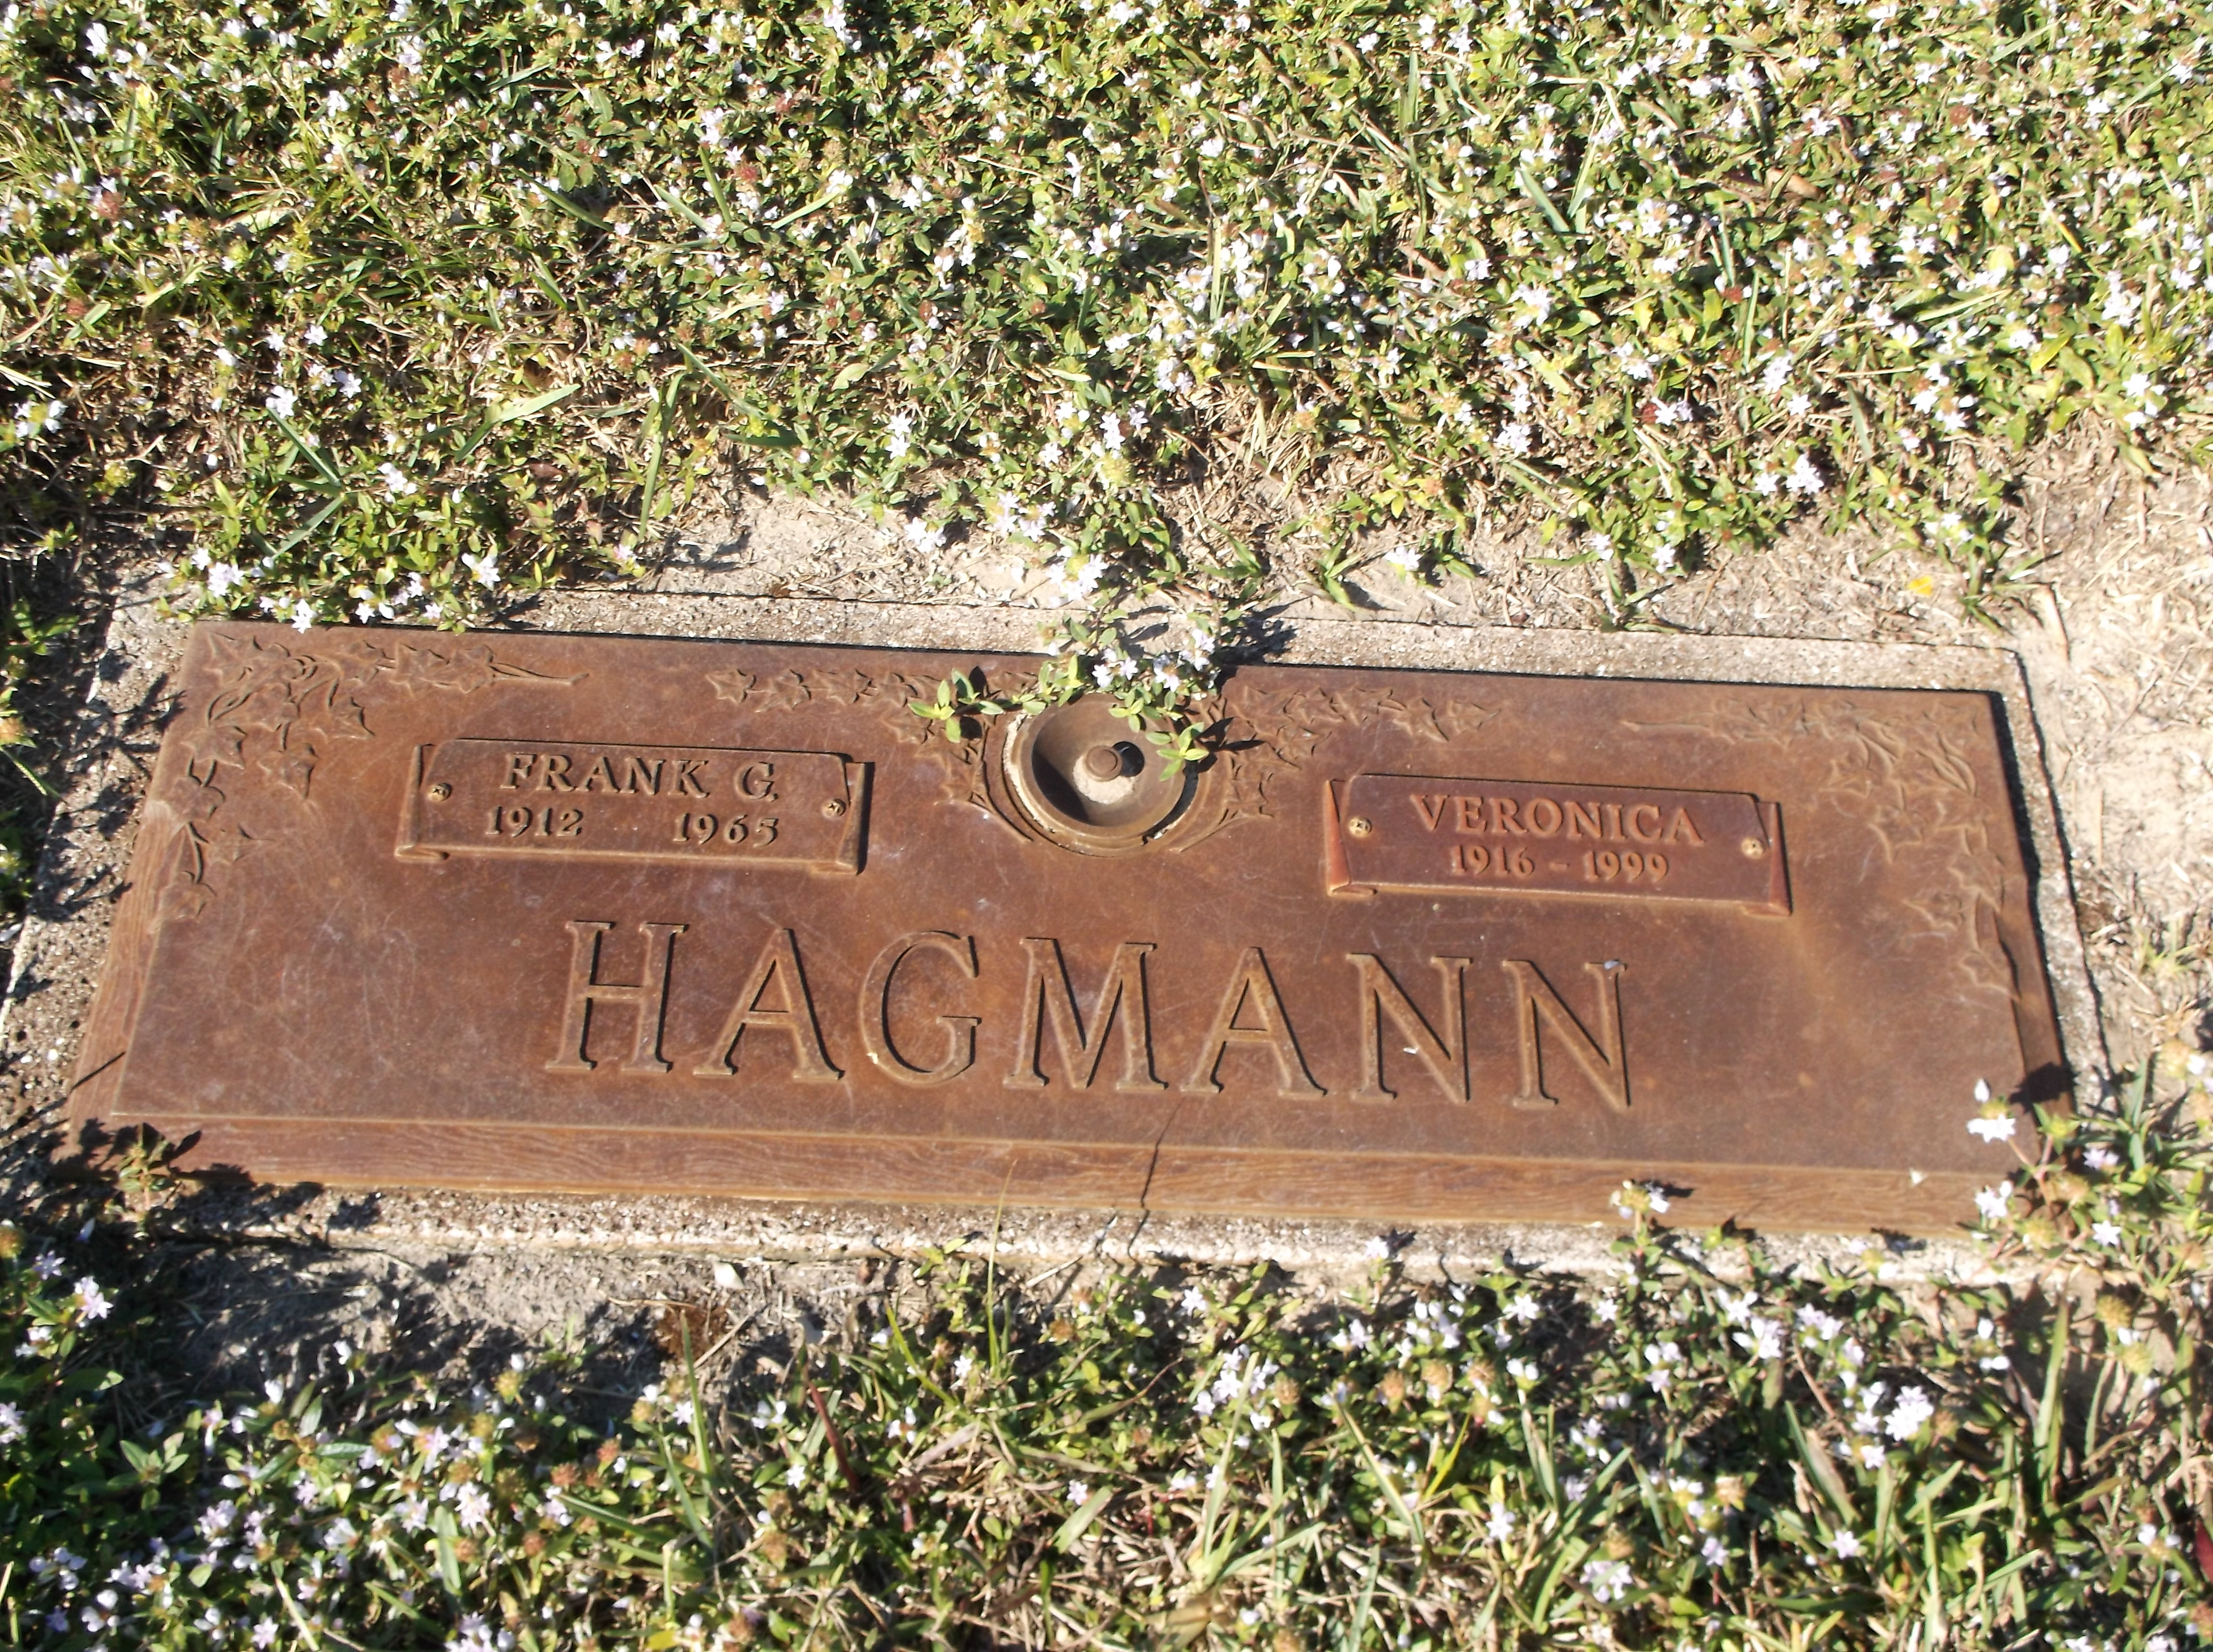 Frank G Hagmann